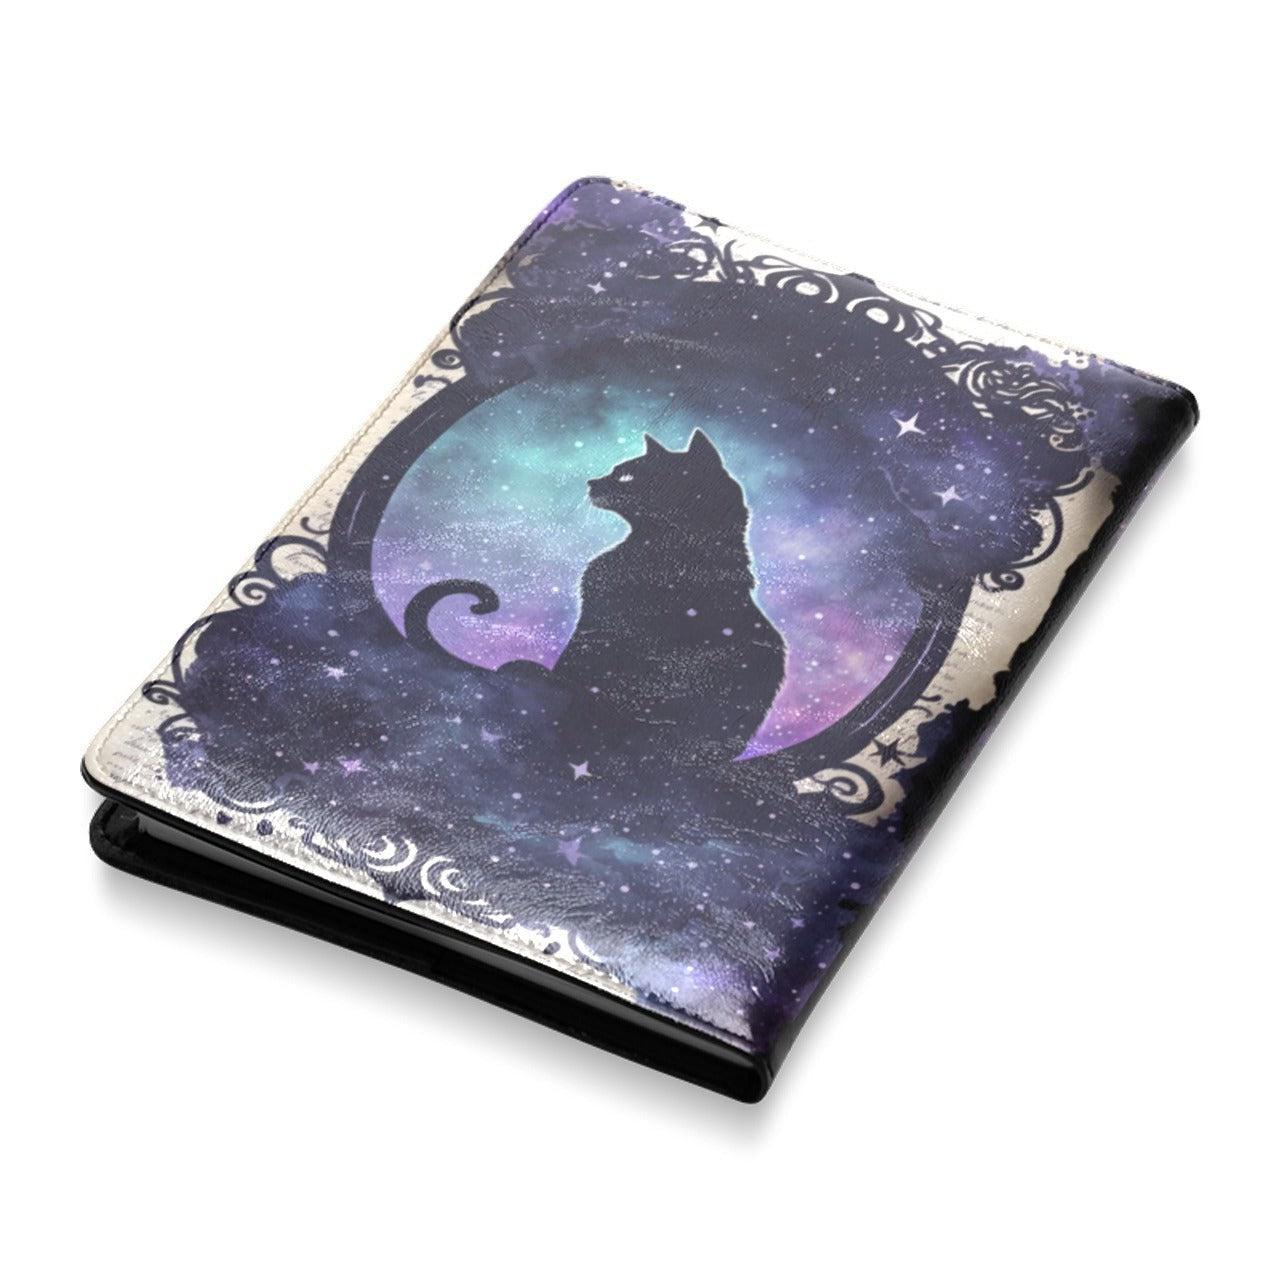 Magic black cat Leather Notebook A5-MoonChildWorld